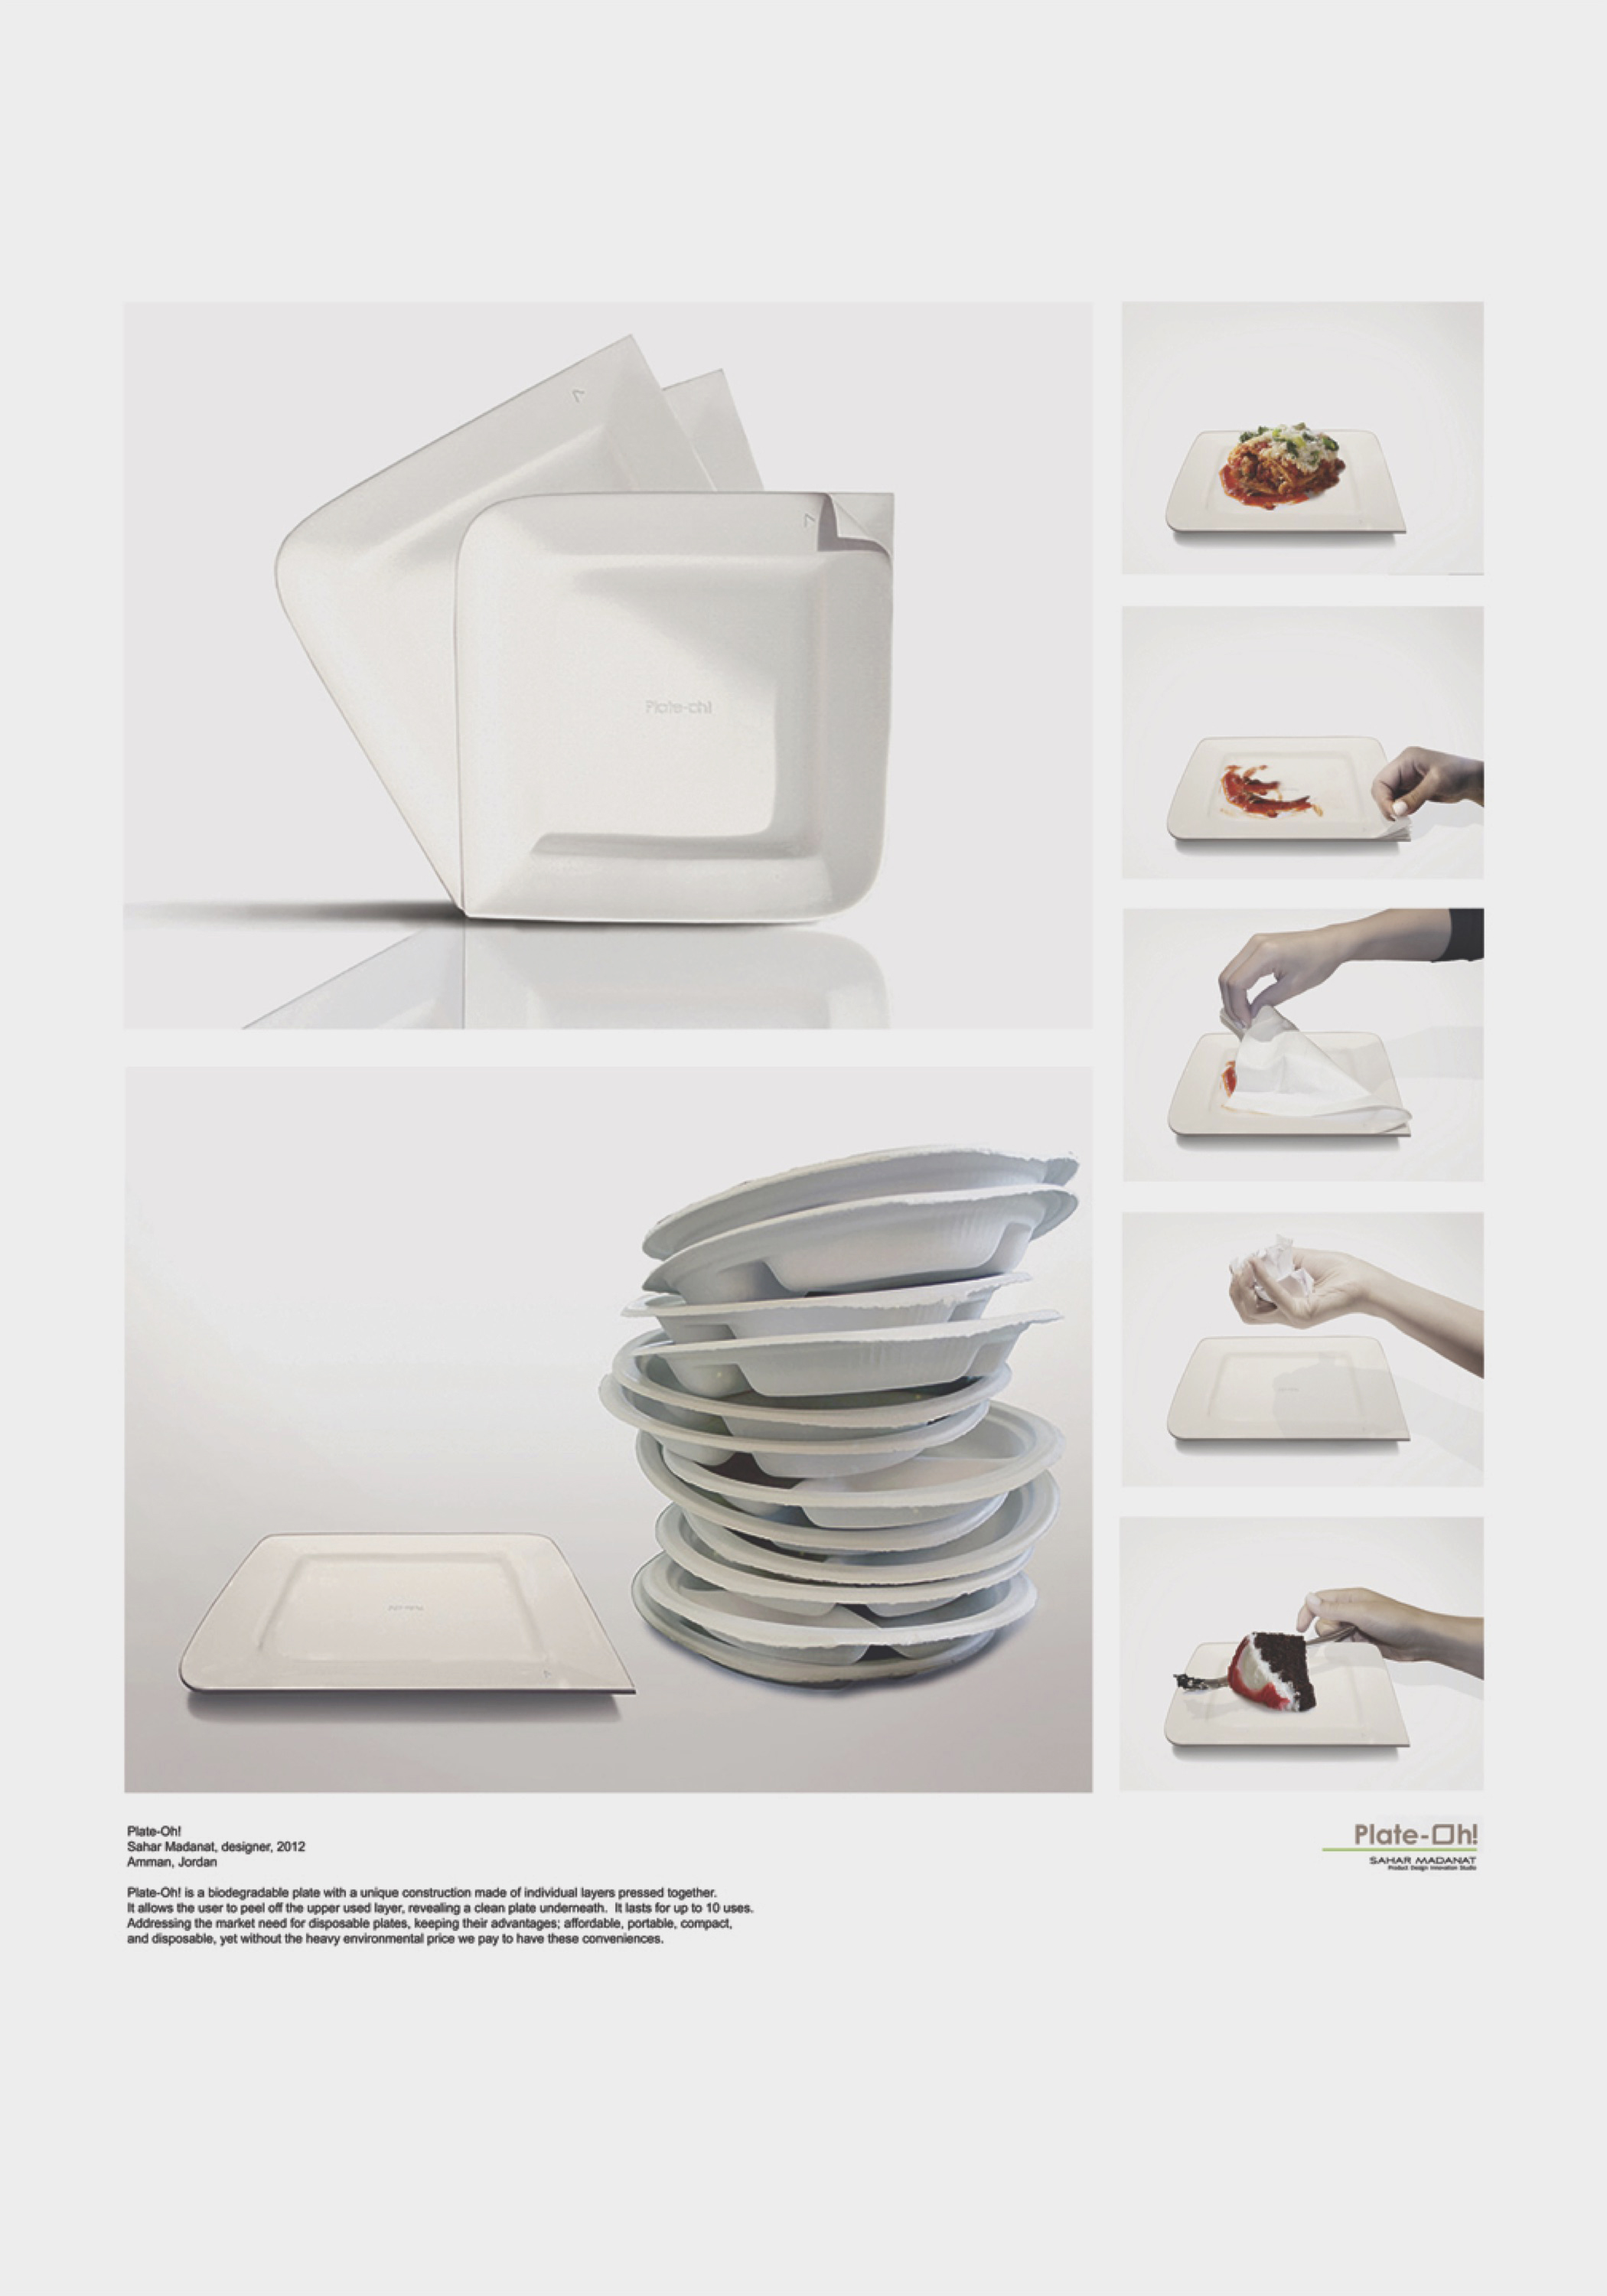 http://dinnerwaremuseum.org/main/wp-content/uploads/Plate-Oh-Poster-2.jpg